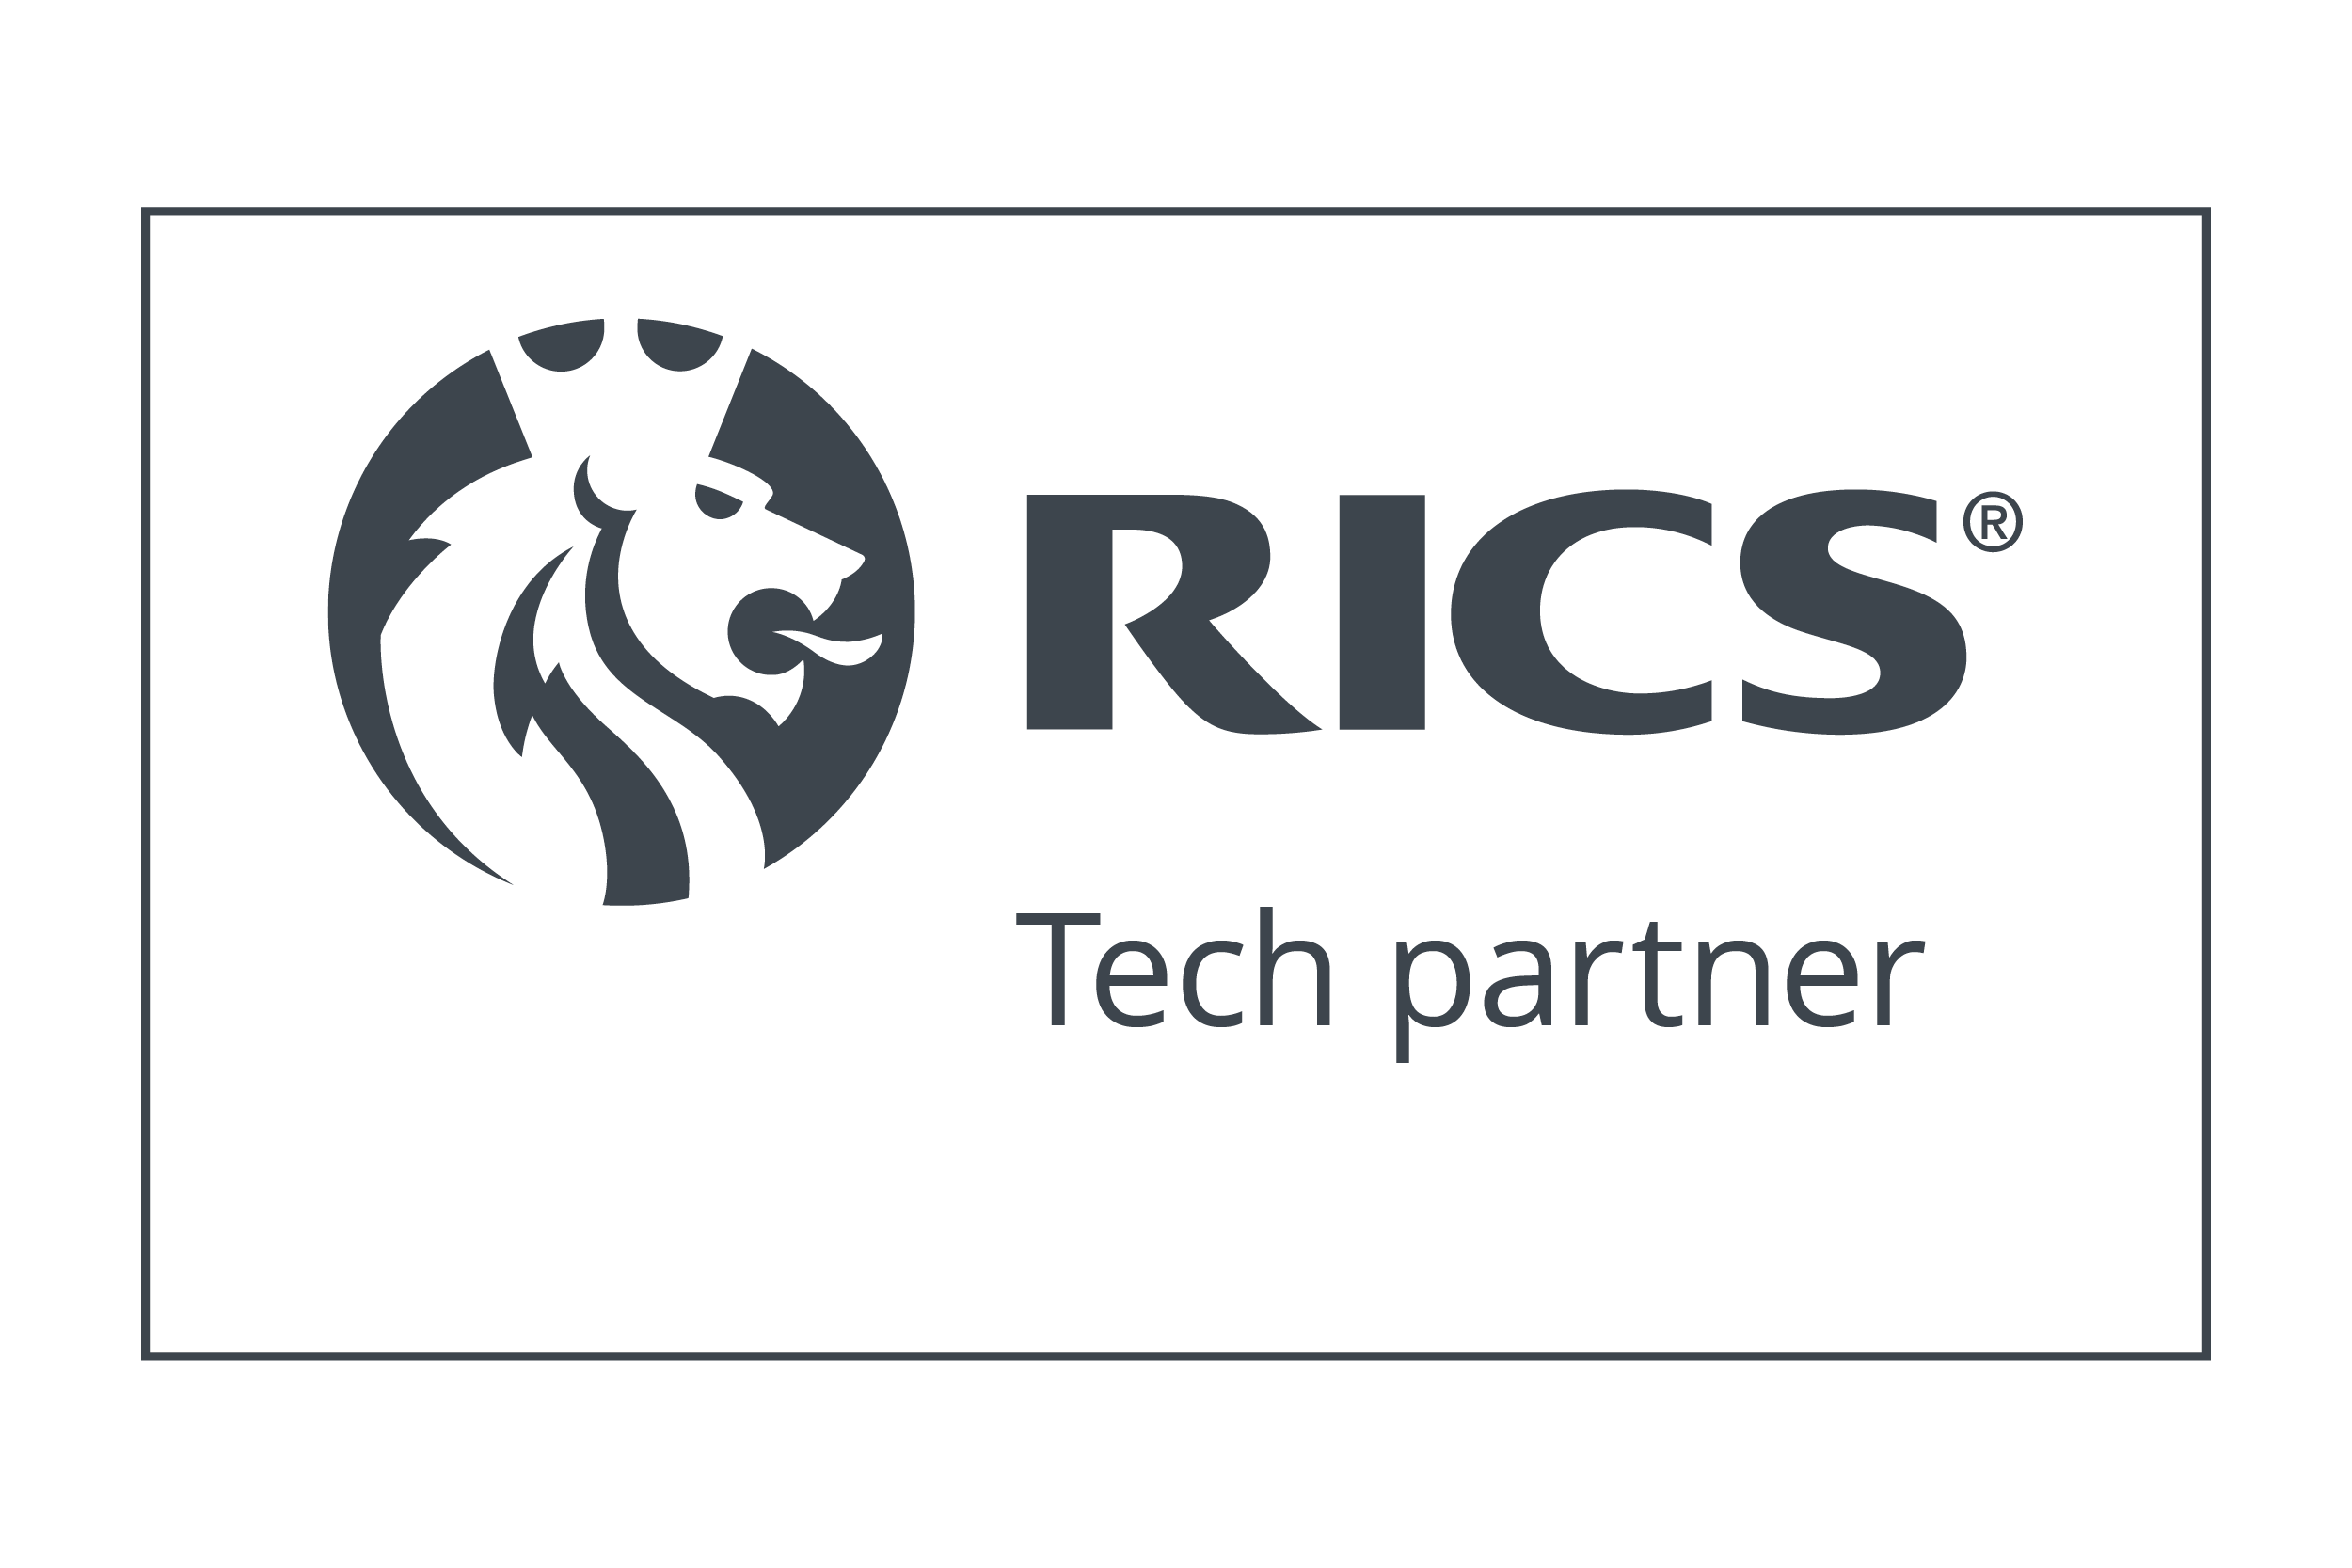 RICS Tech Partner